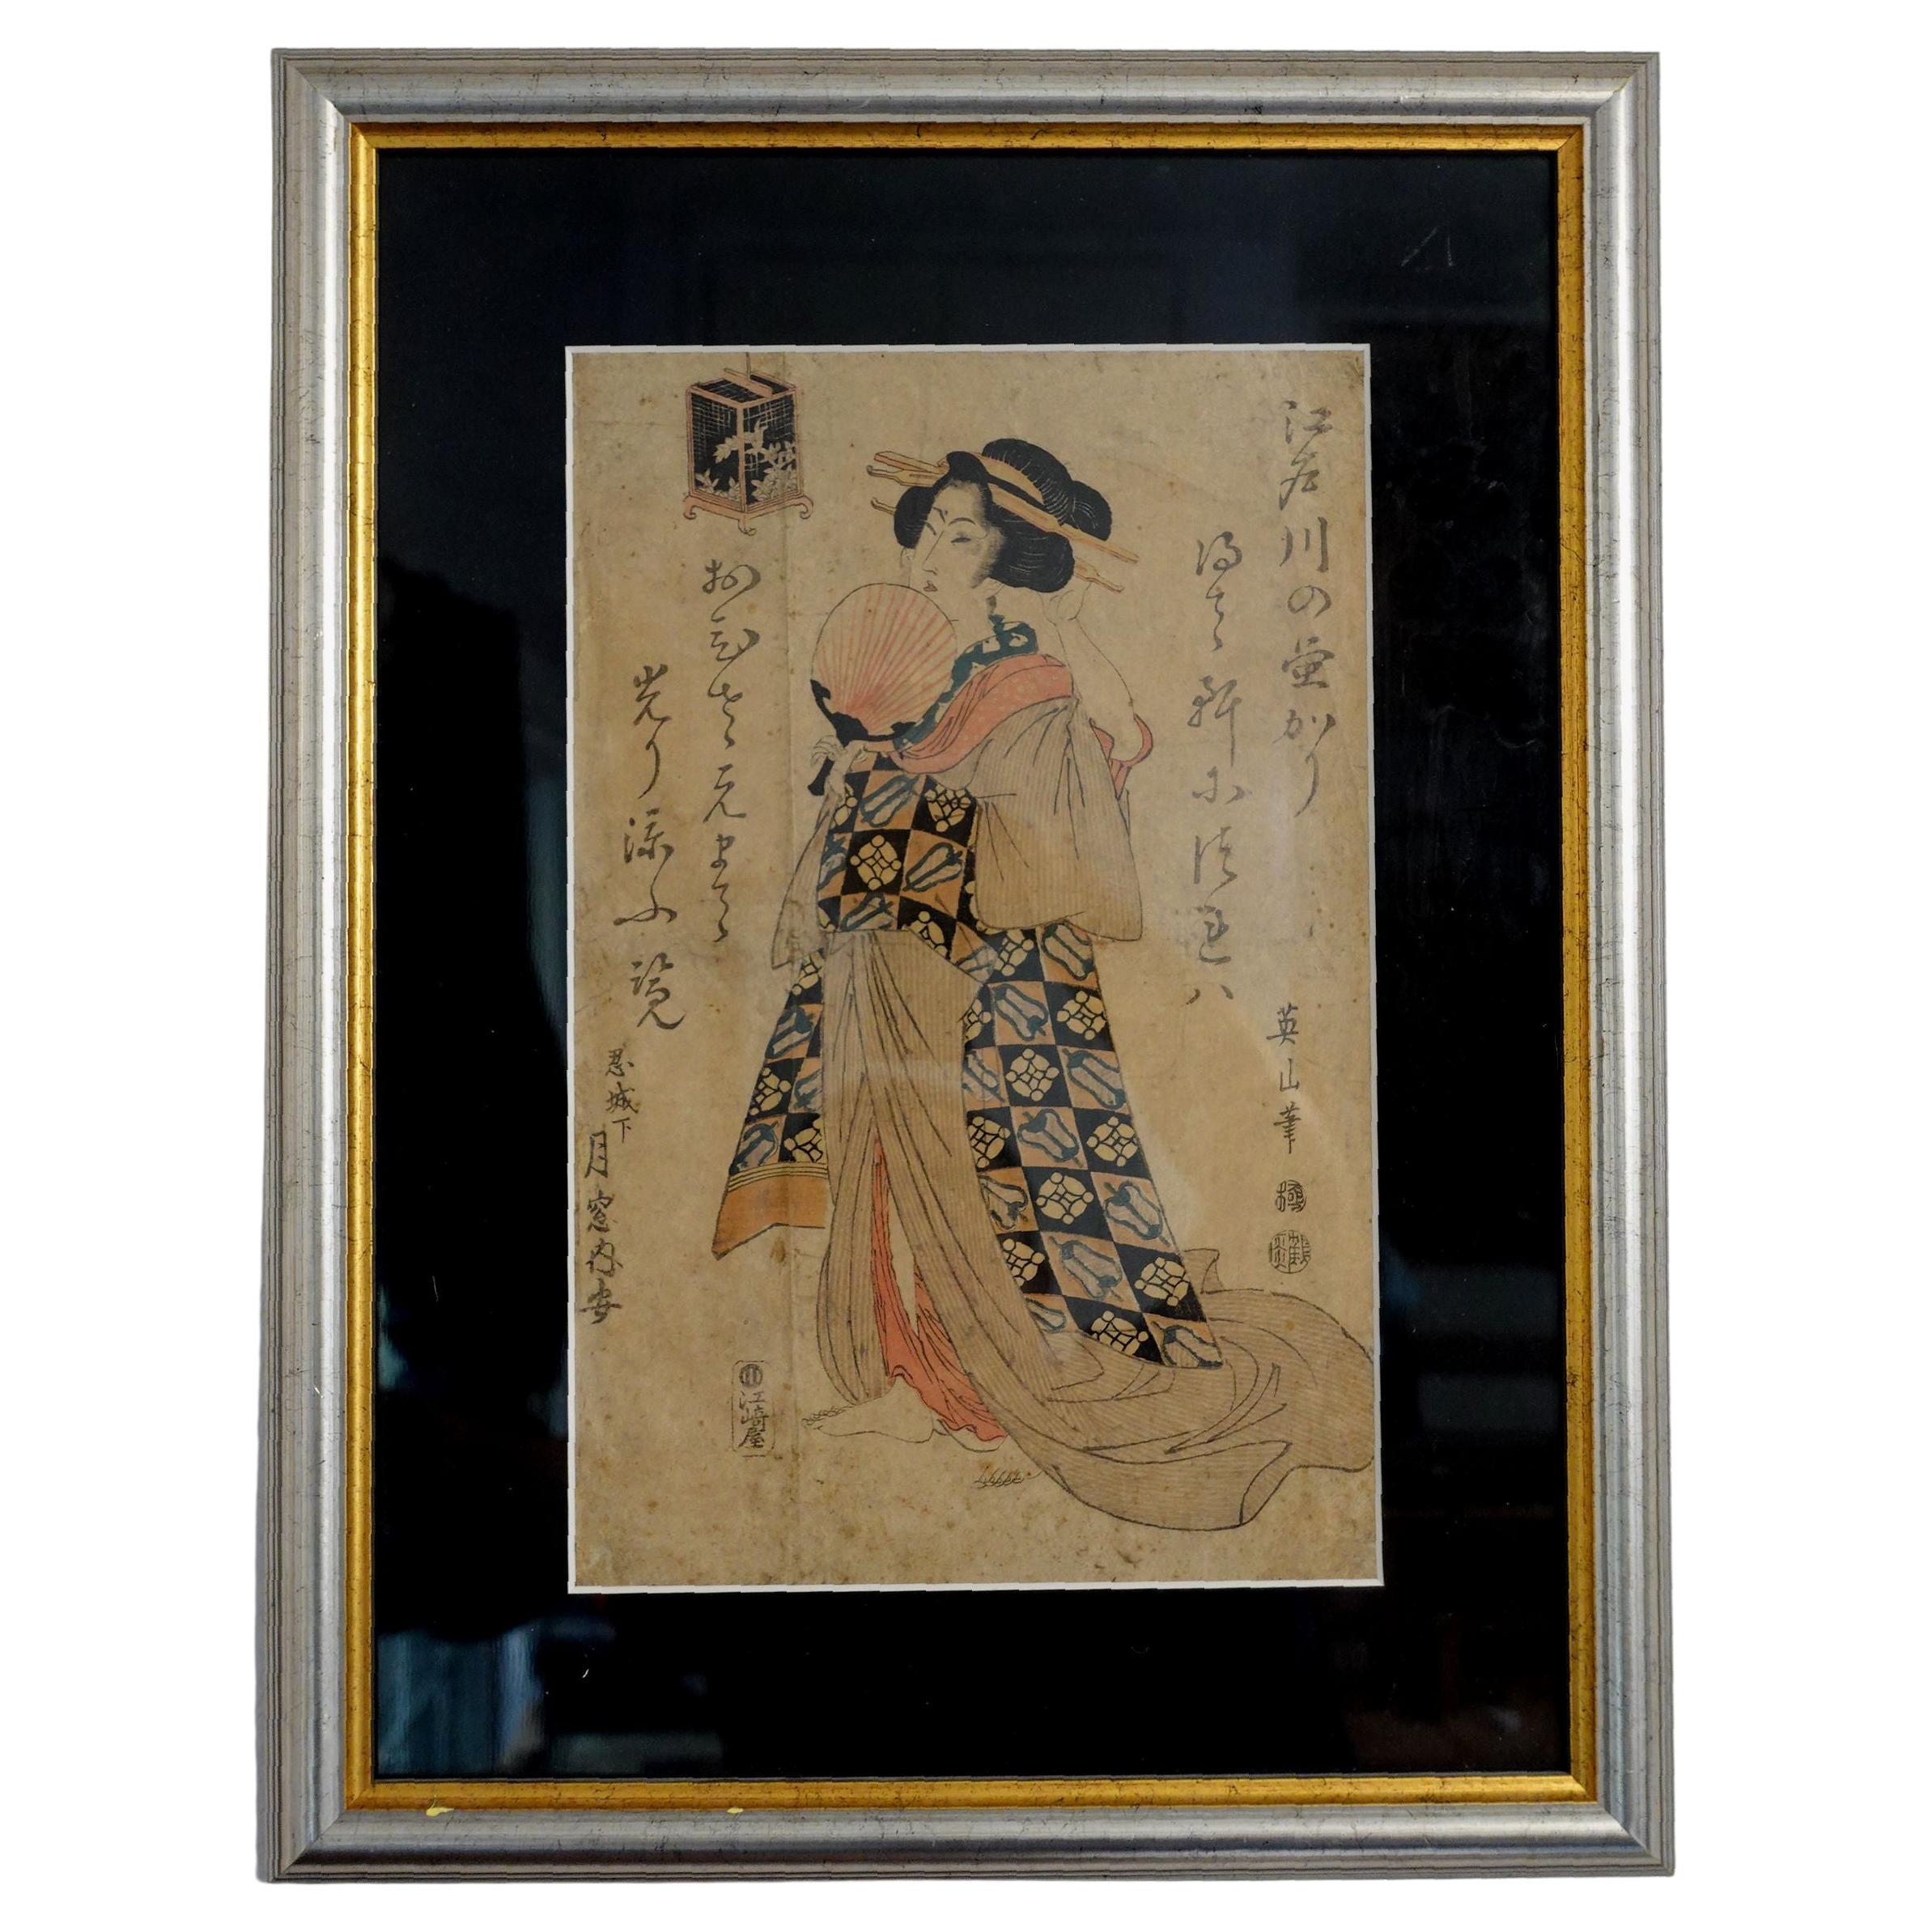 Japanese Woodblock Print " The Geisha" by Kikukawa Eizan (菊川英山) RicJ002